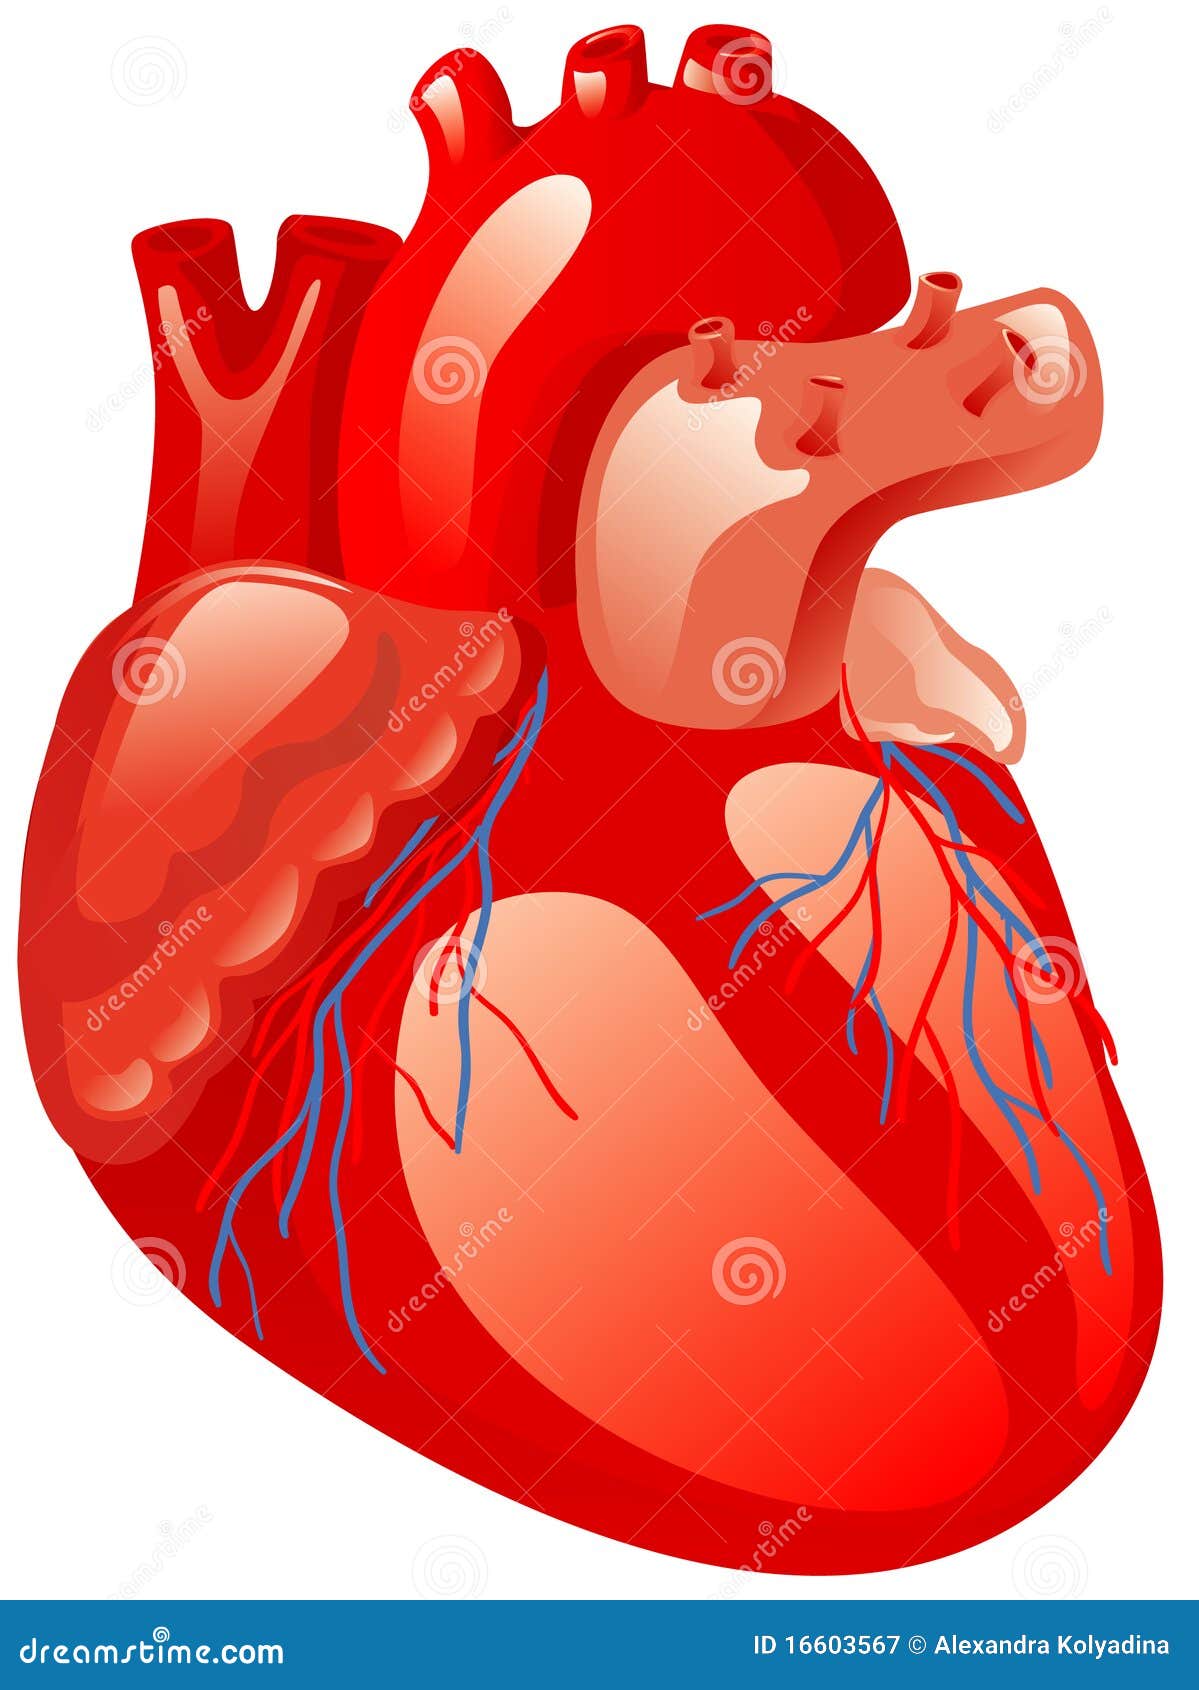 free clipart human heart - photo #15